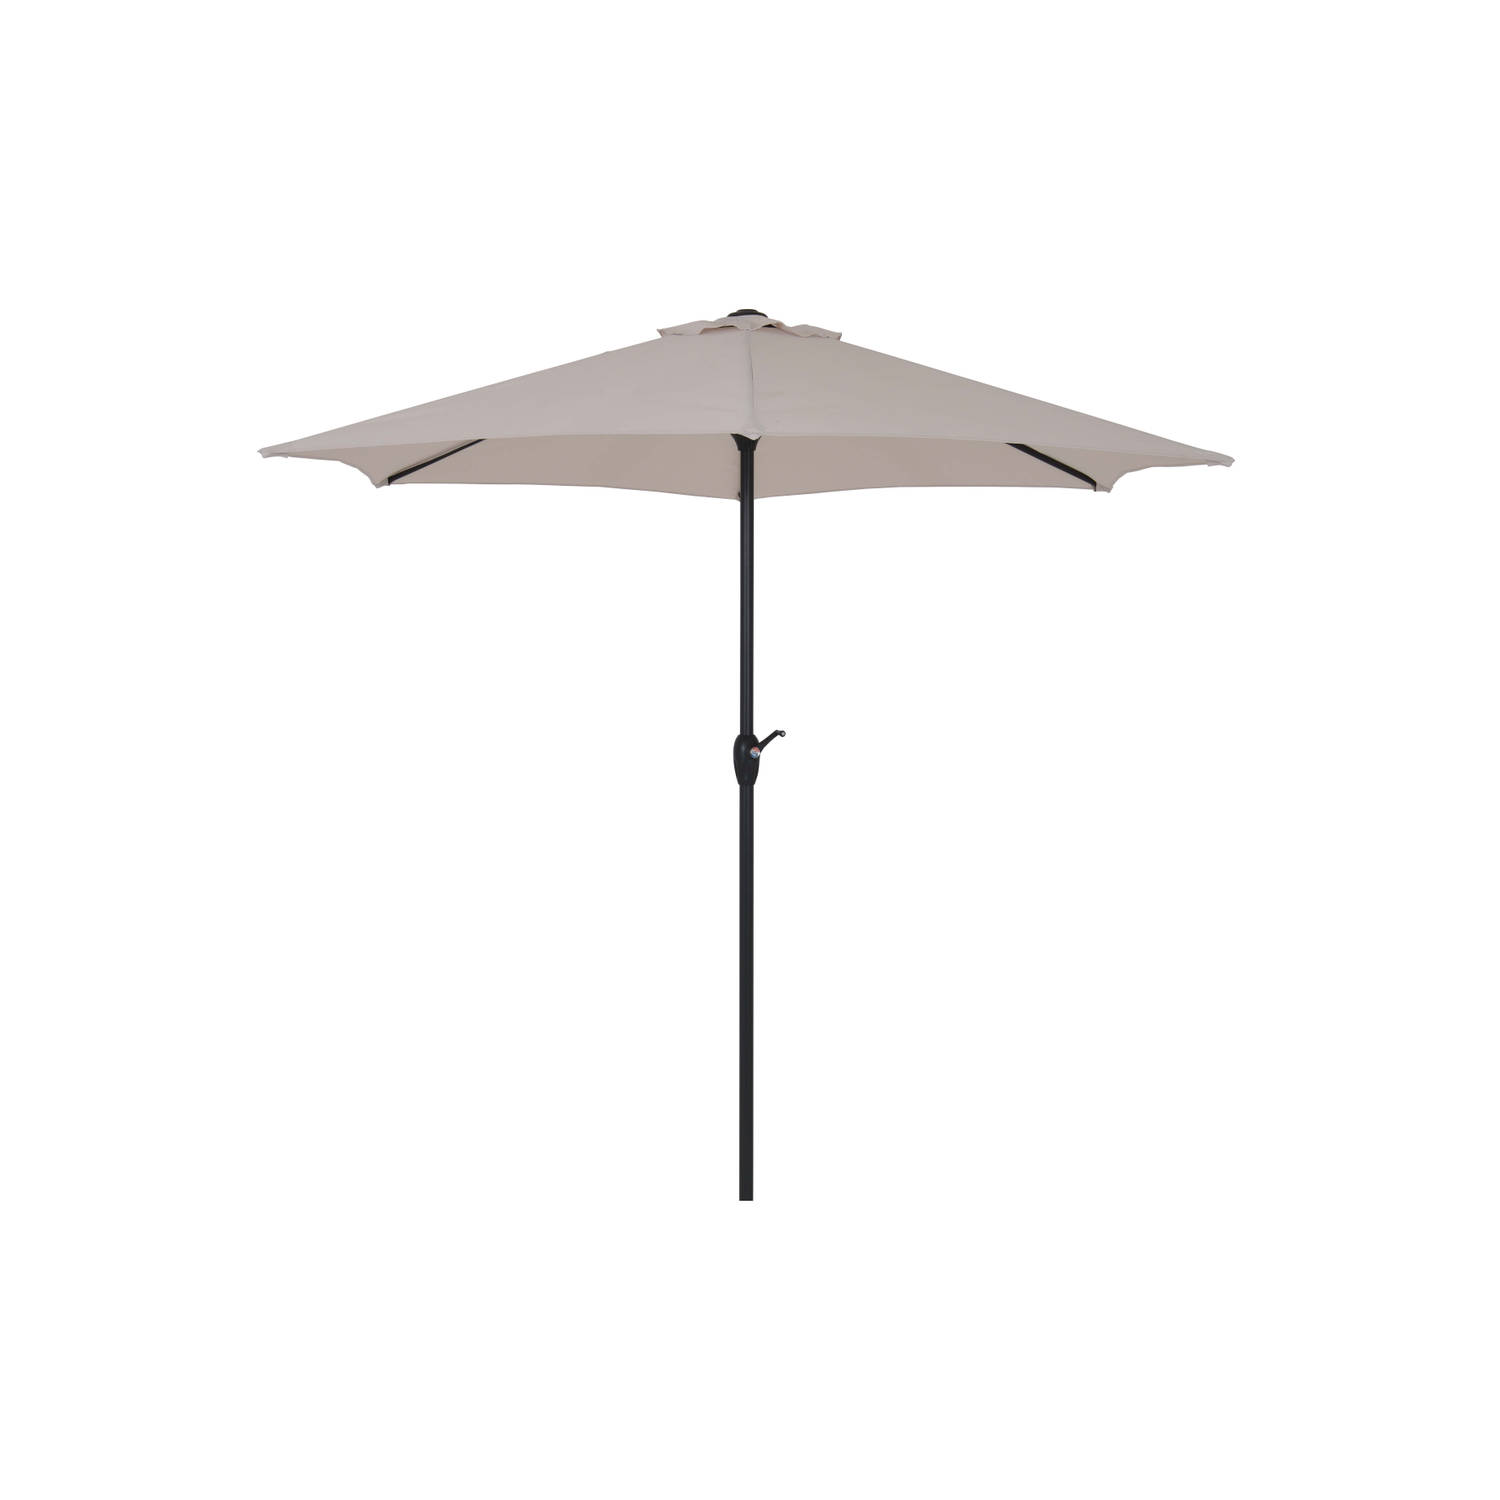 Dochter compleet Kano Royal Patio parasol Terna ecru Ø250 | Blokker